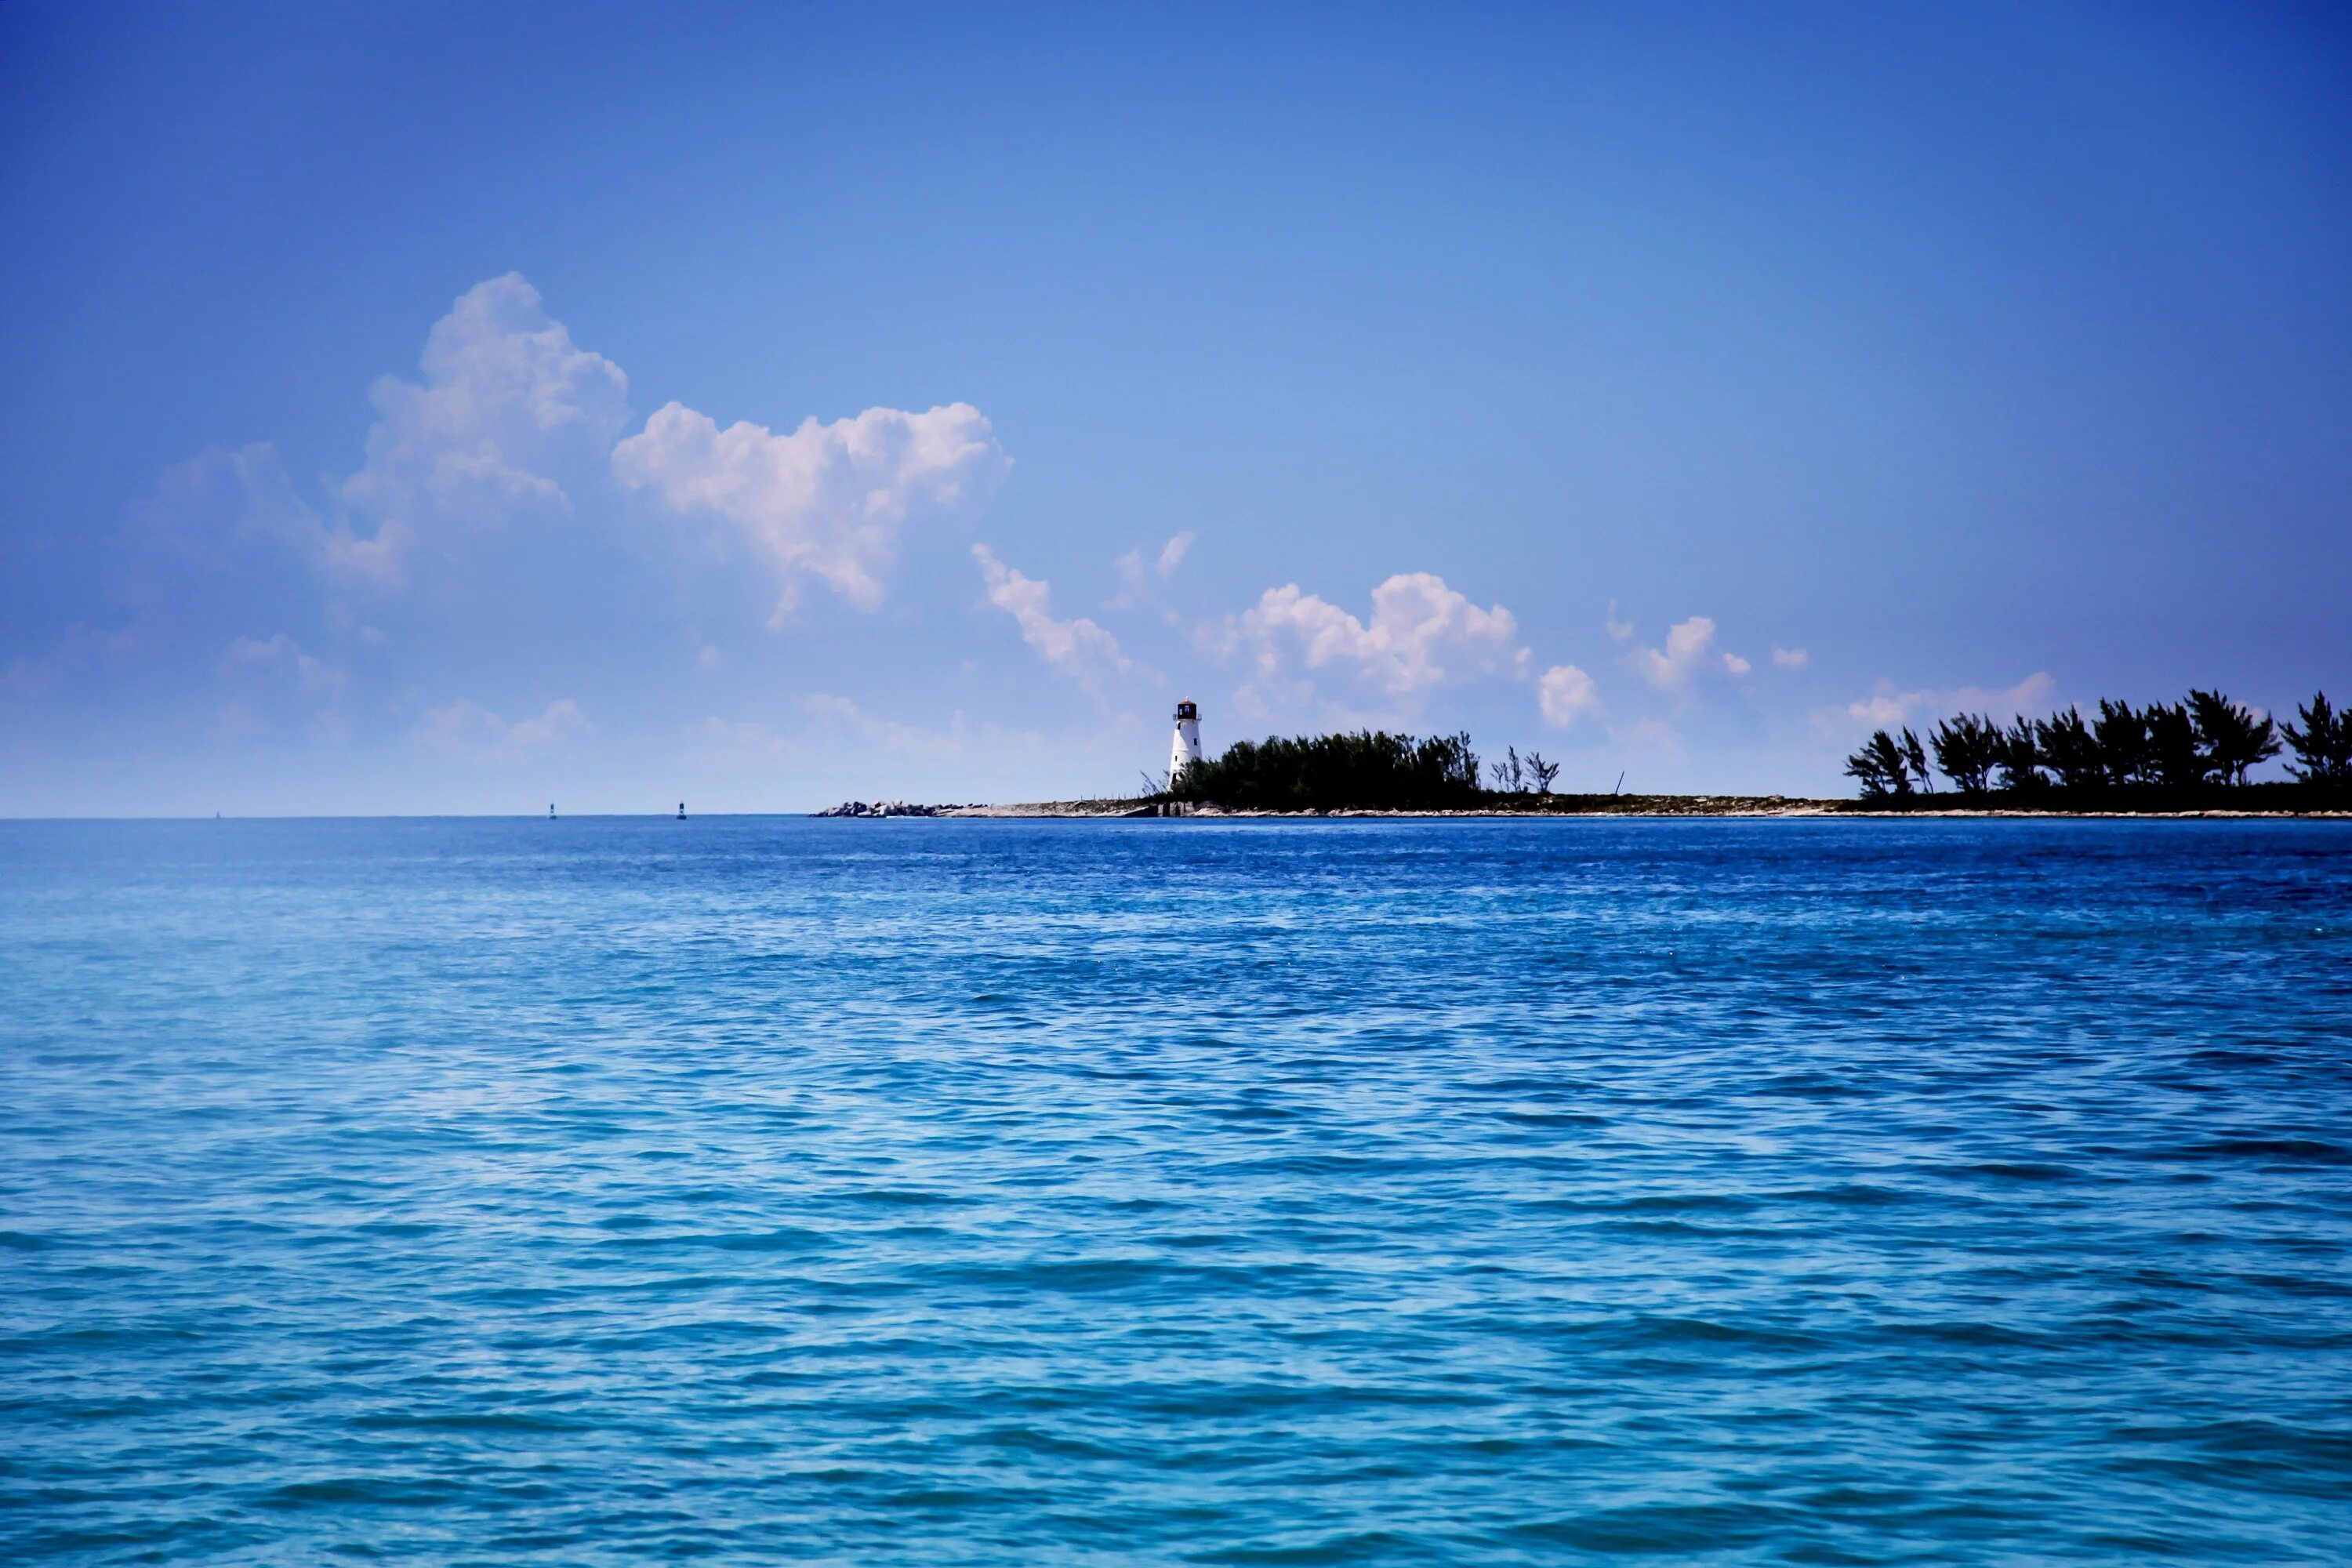 Island вода. Сиамский залив индийский океан. Острова и море. Берег со стороны моря. Остров в океане.